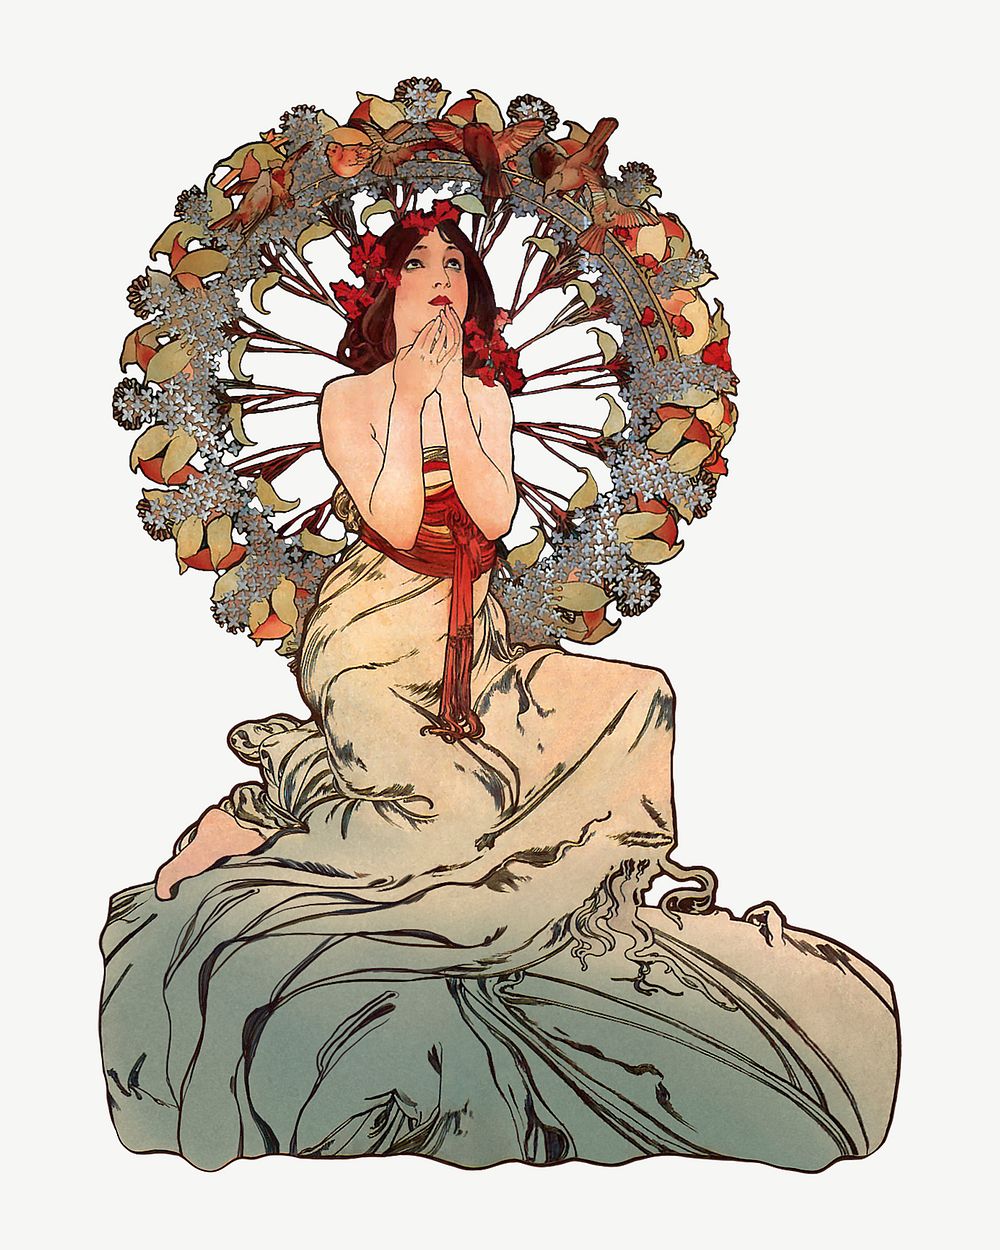 Alfons Mucha's woman art nouveau illustration psd. Remixed by rawpixel. 